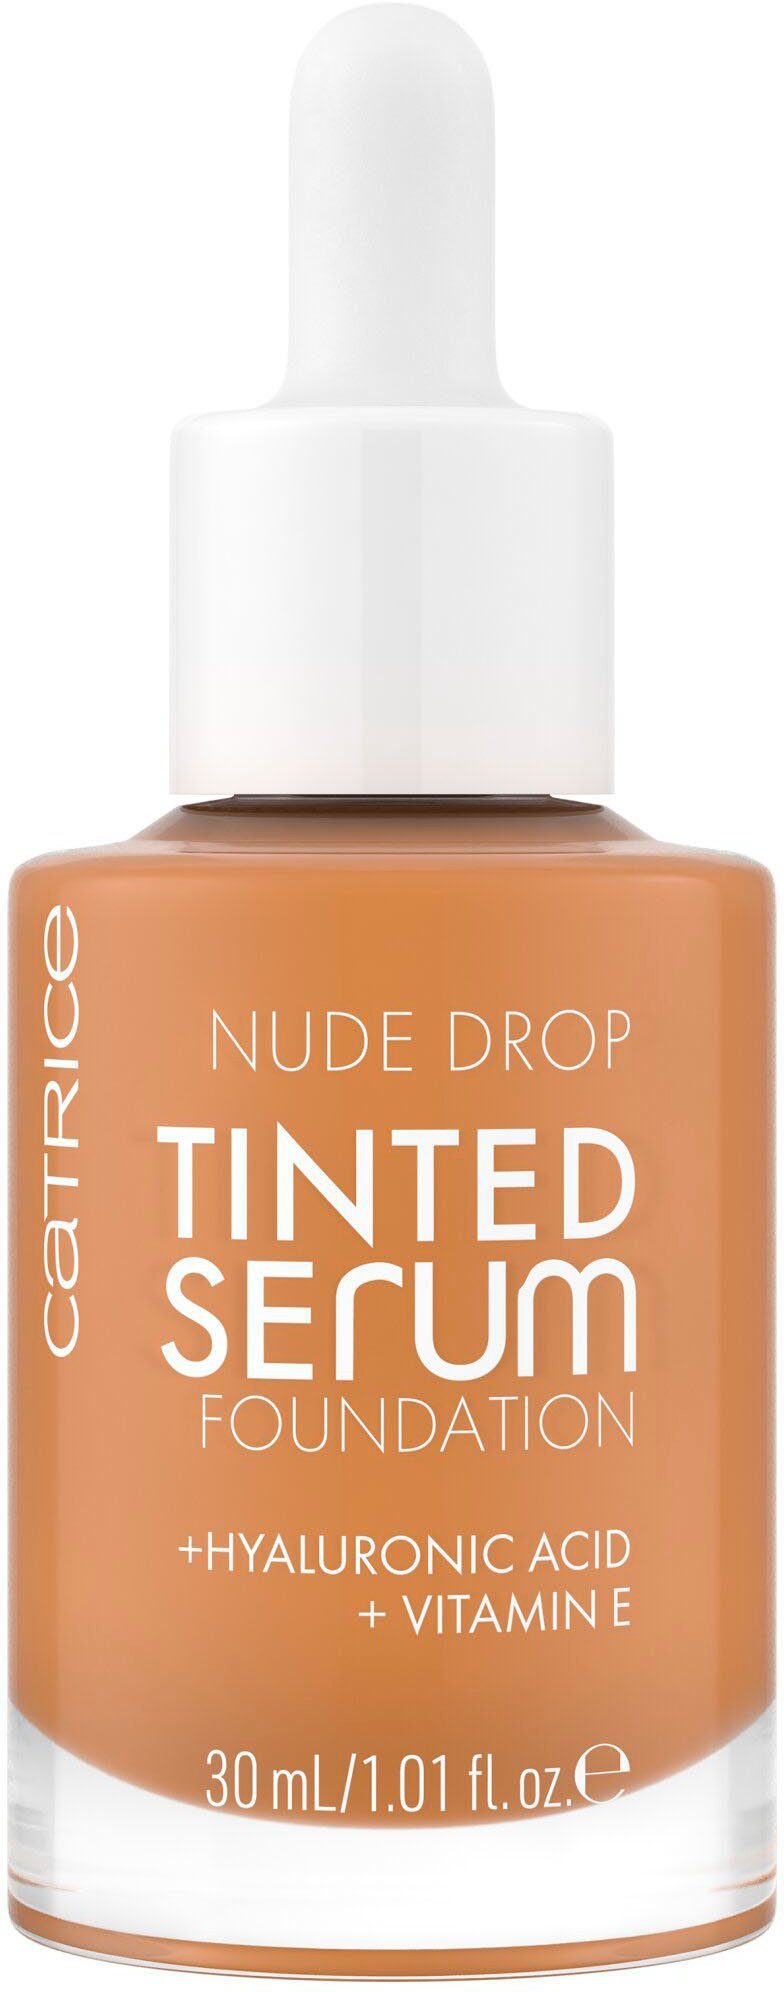 Catrice Foundation Nude Drop Tinted Serum Foundation 075C nude | Foundation